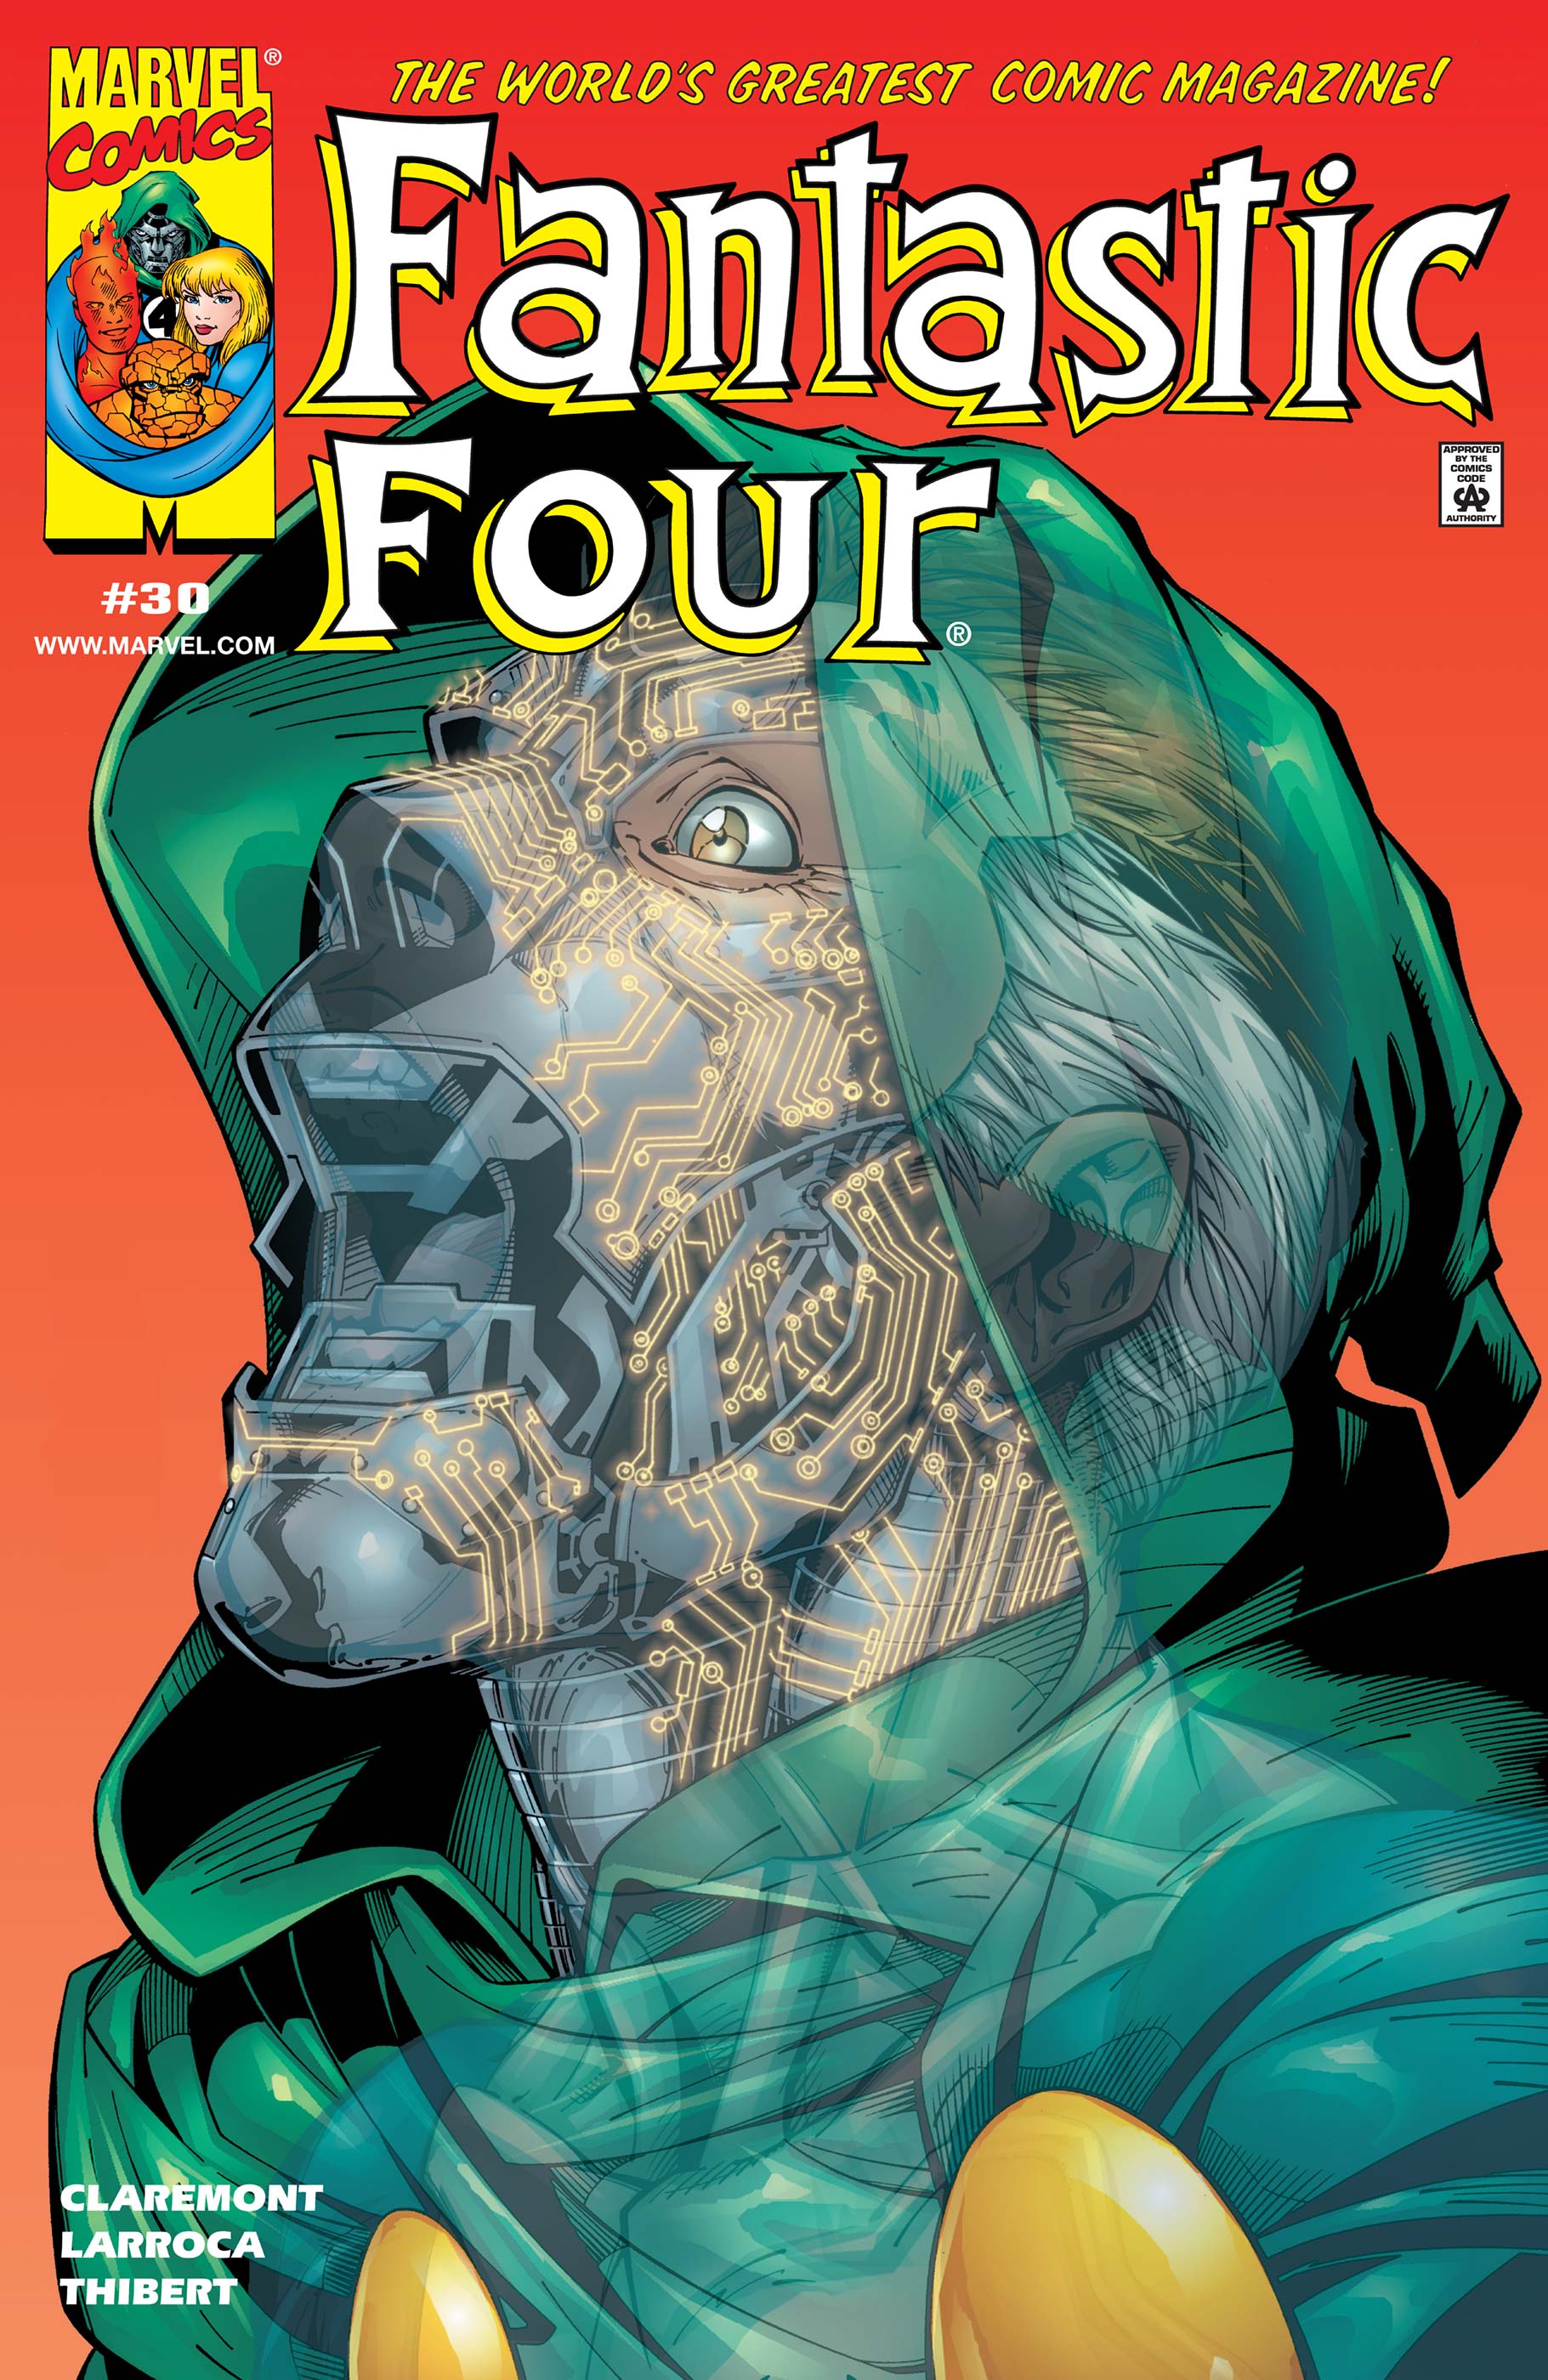 Fantastic Four (1998) #30